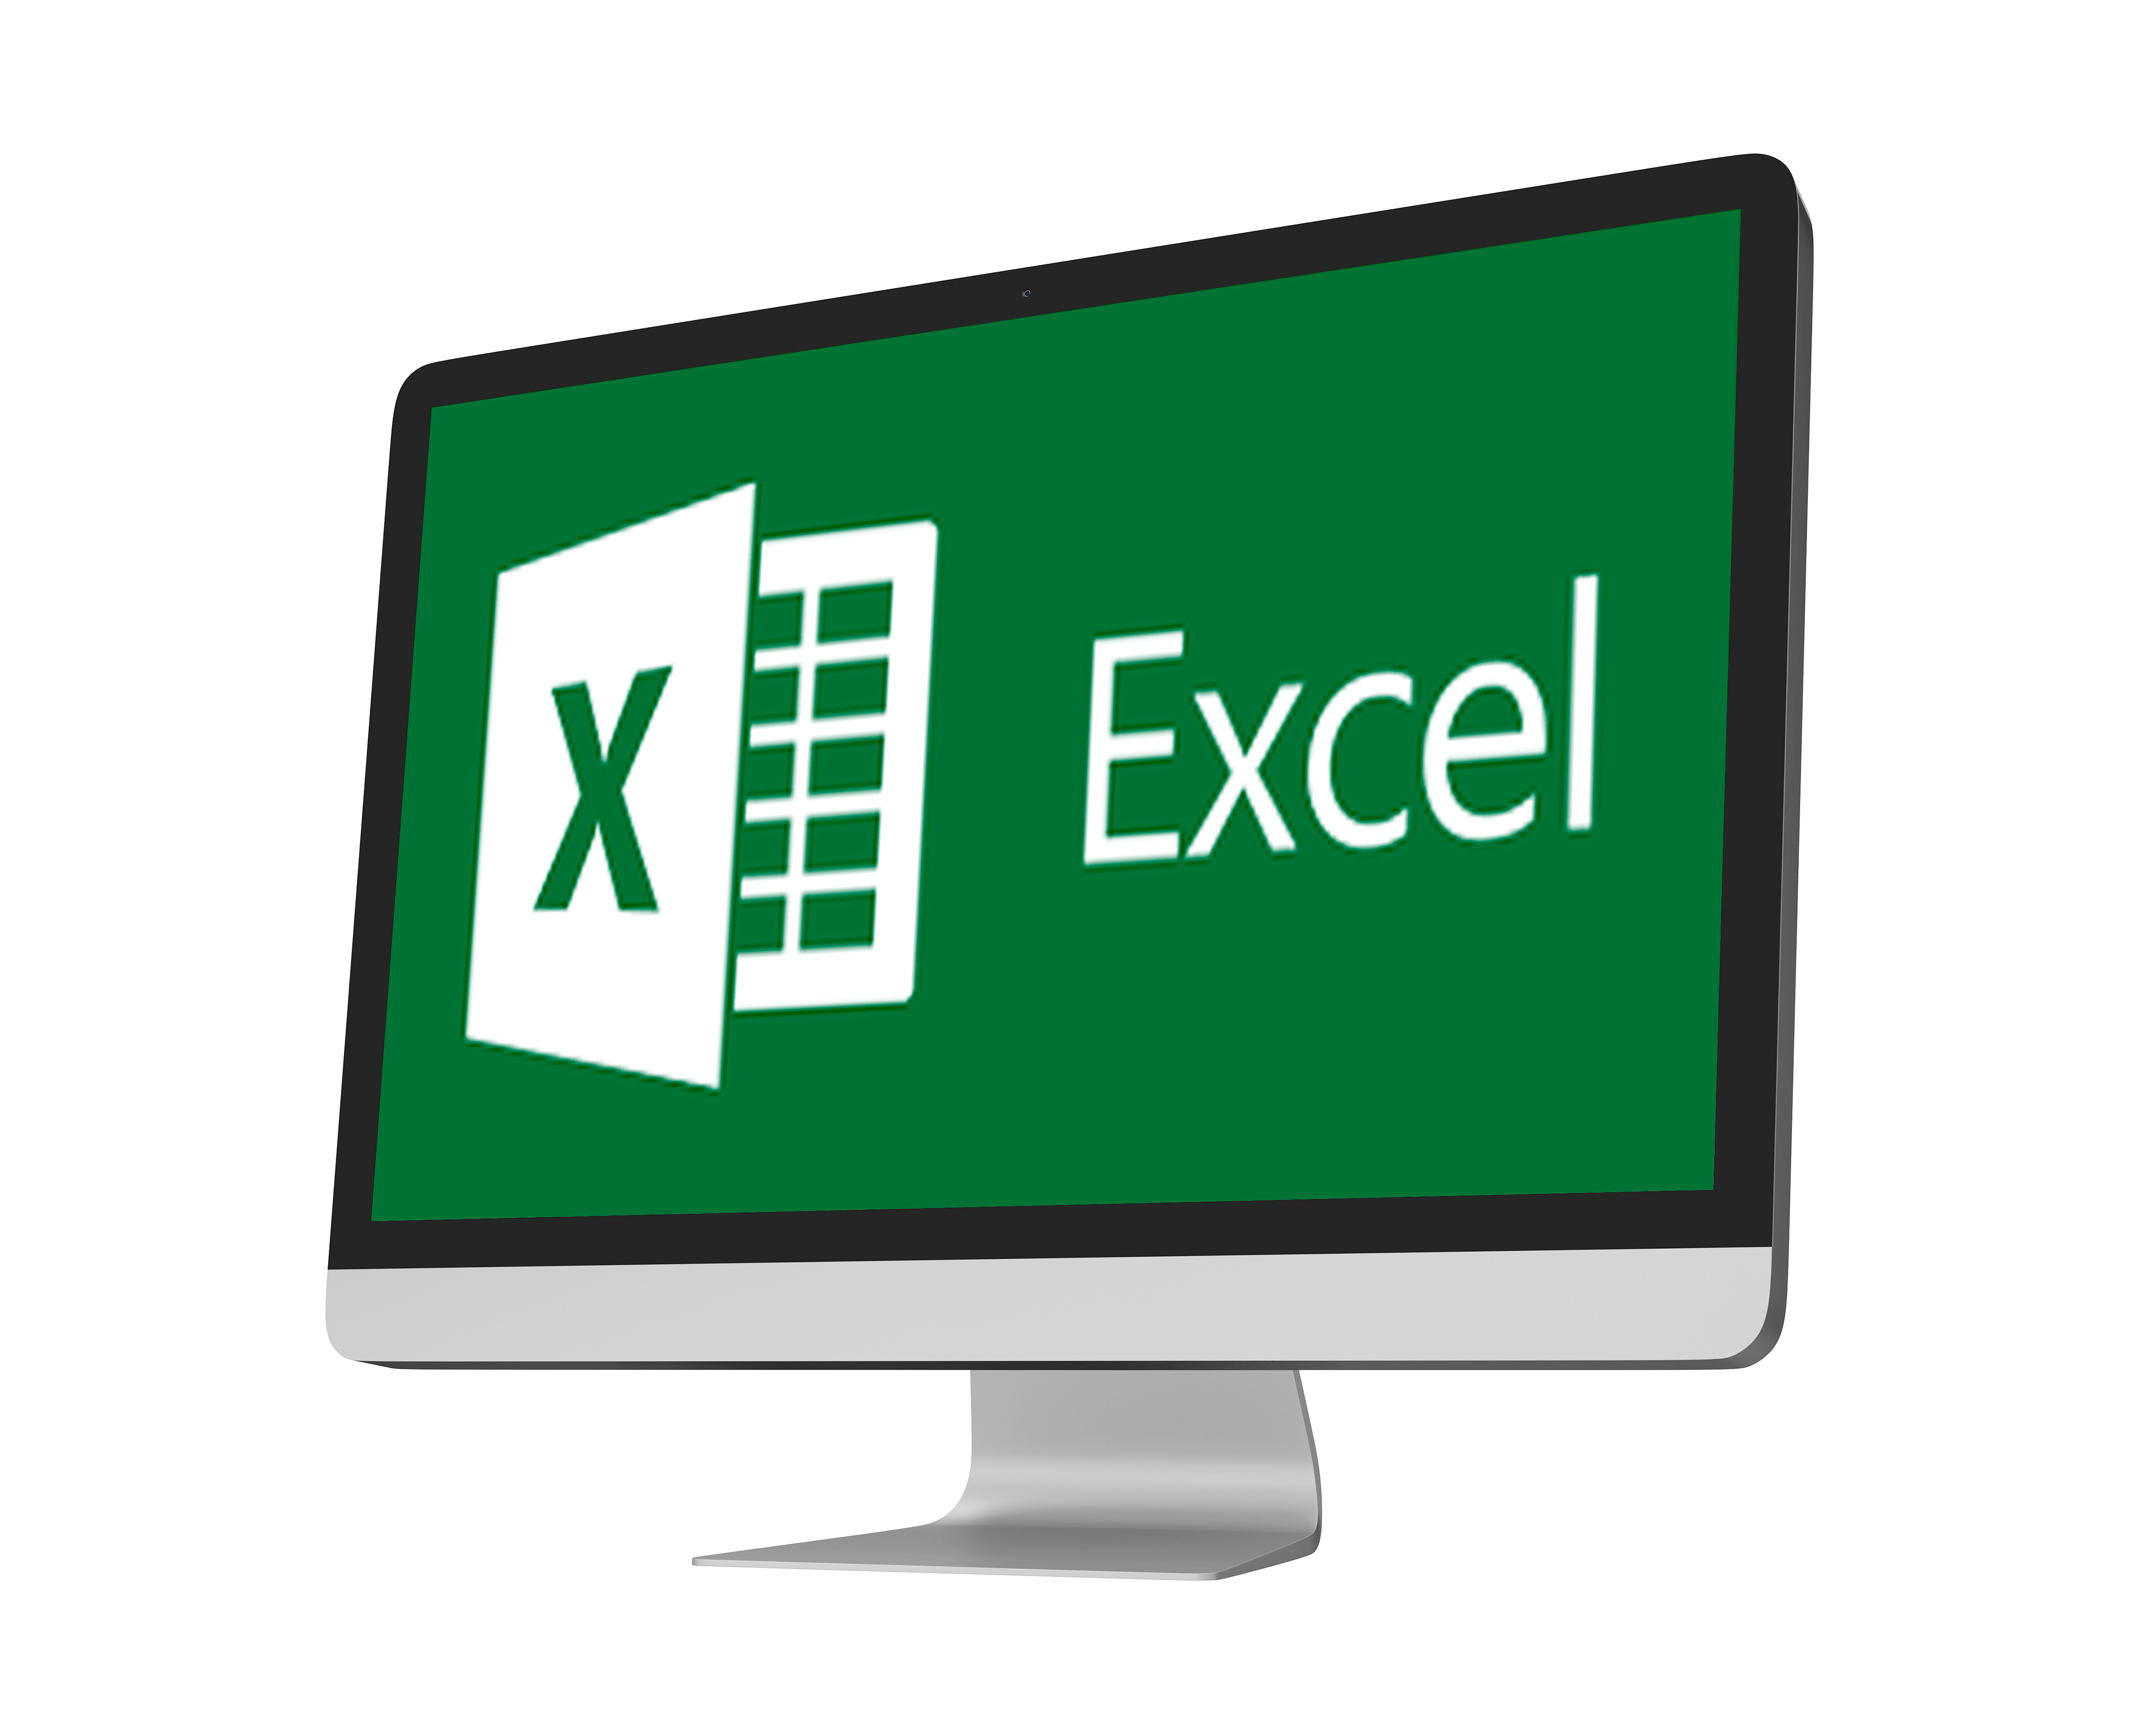 Excel 파일의 이전 버전으로 되돌리는 방법